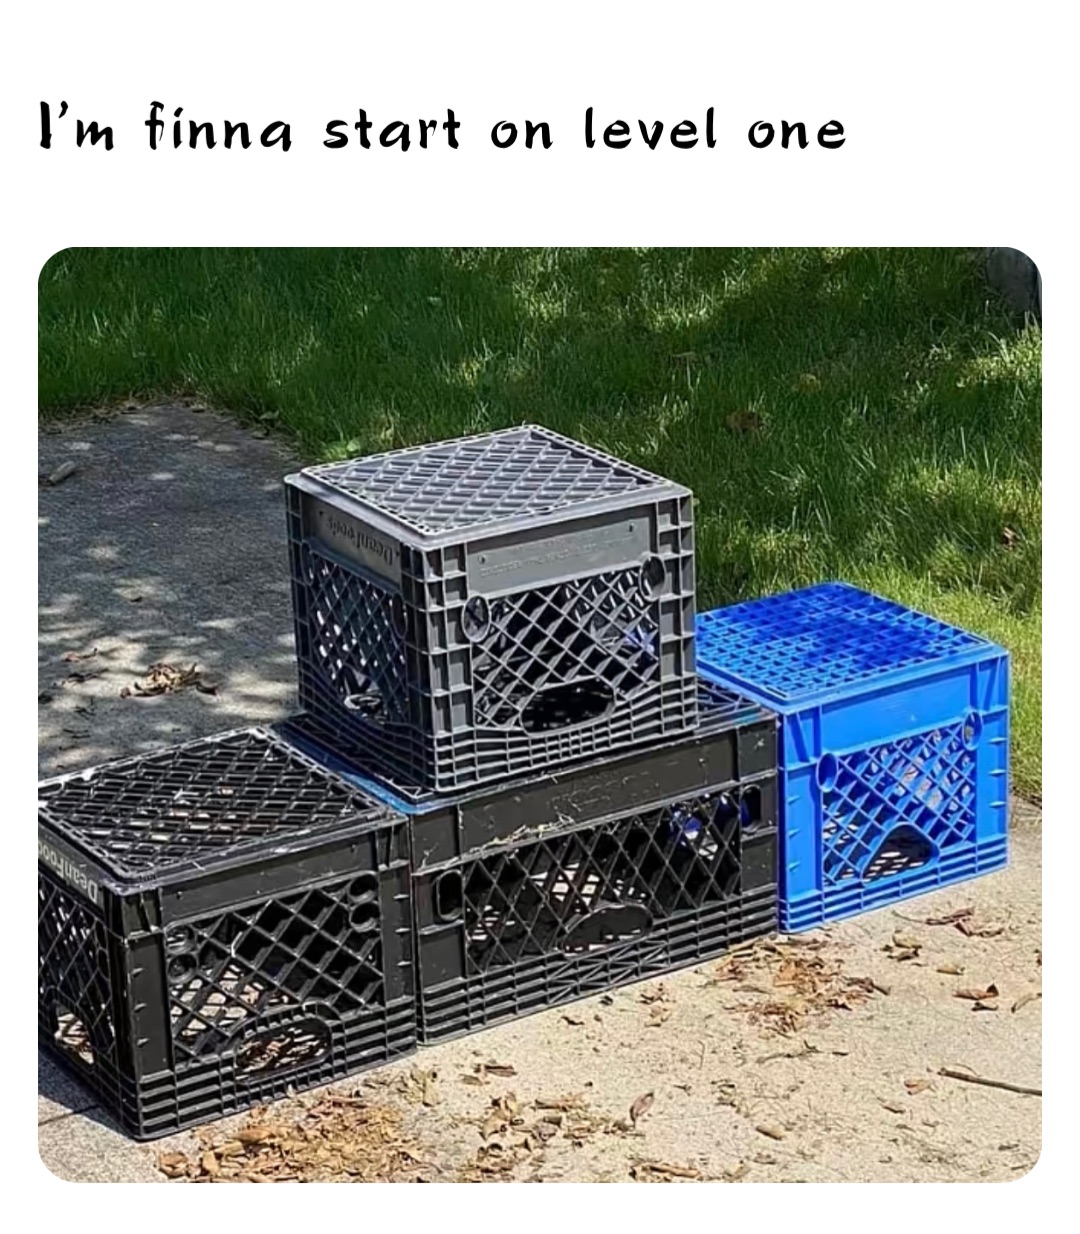 I’m finna start on level one